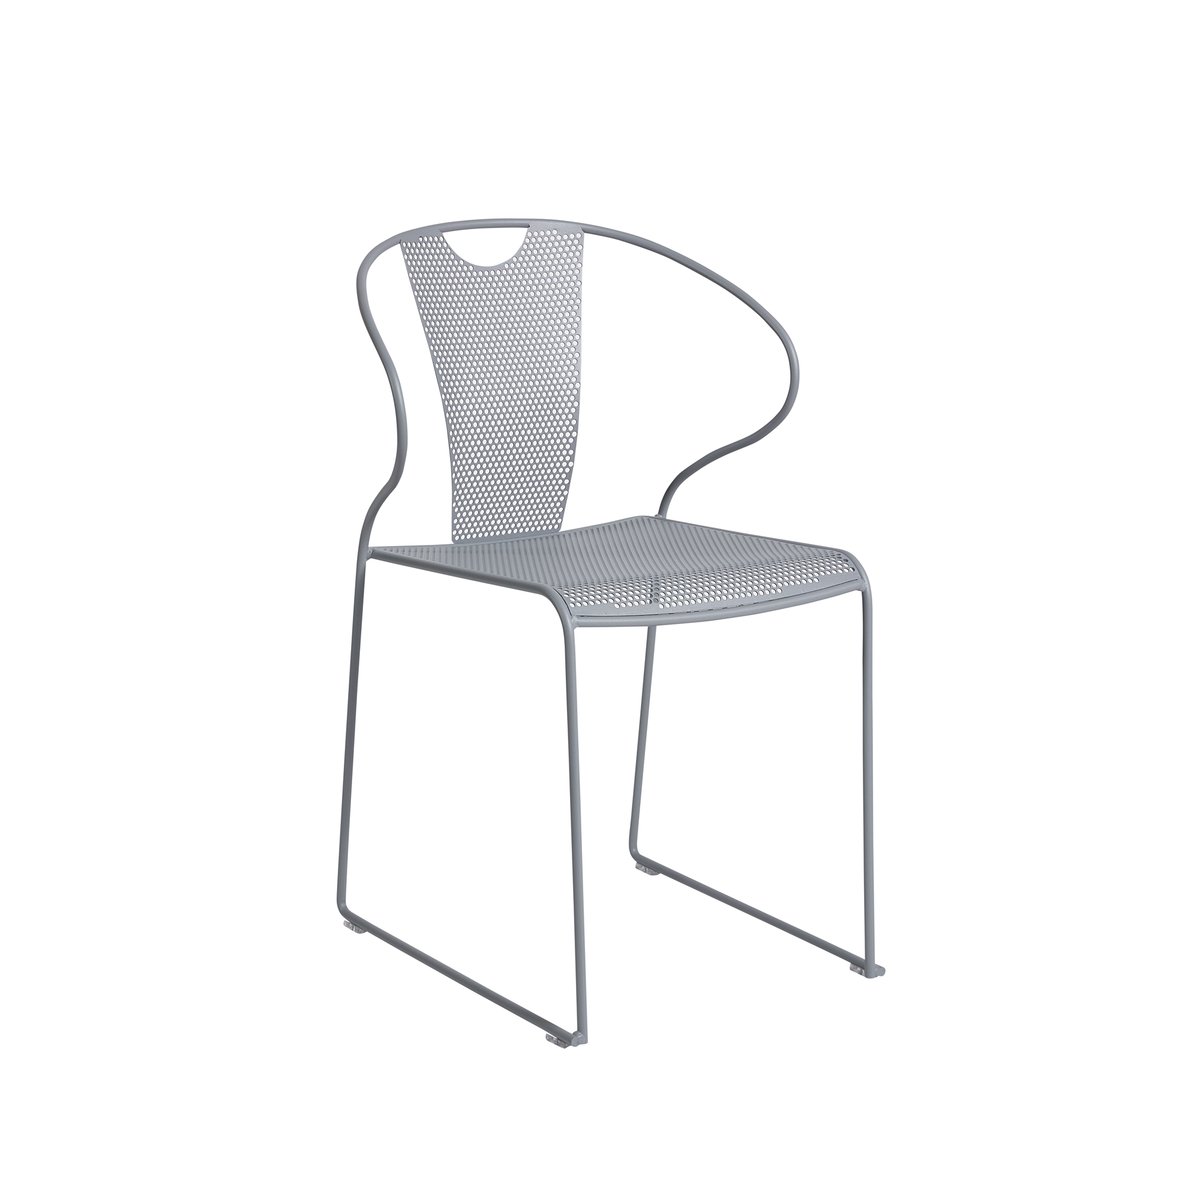 SMD Design Piazza stoel met armleuningen lichtgrijs